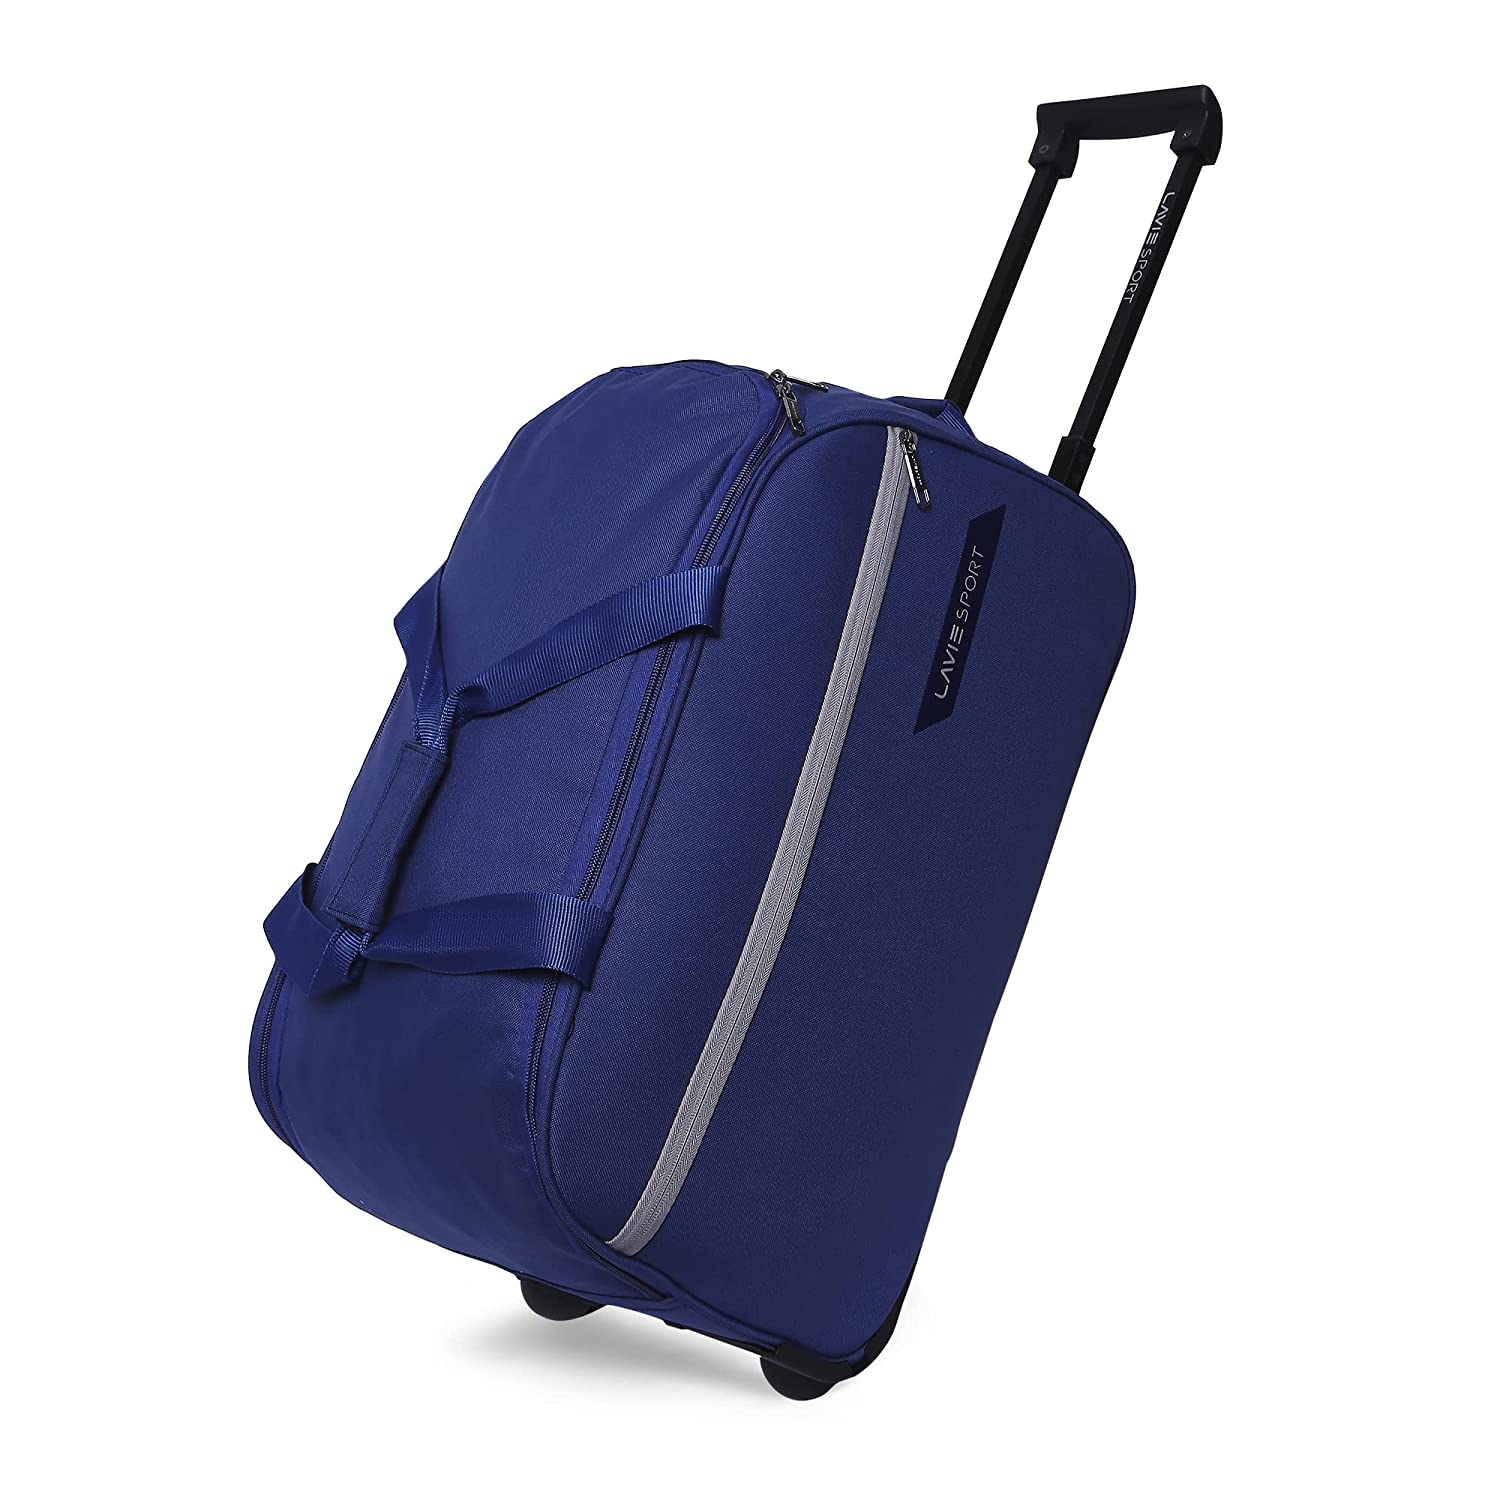 Trolley Bag On Amazon VIP American Tourister Safari Hardsided Cabin Luggage  Bag Best Brand Trolley Bag Set  Trolley Bags पर अमजन क सबस बड सल  फलट 70 म खरद य कमब